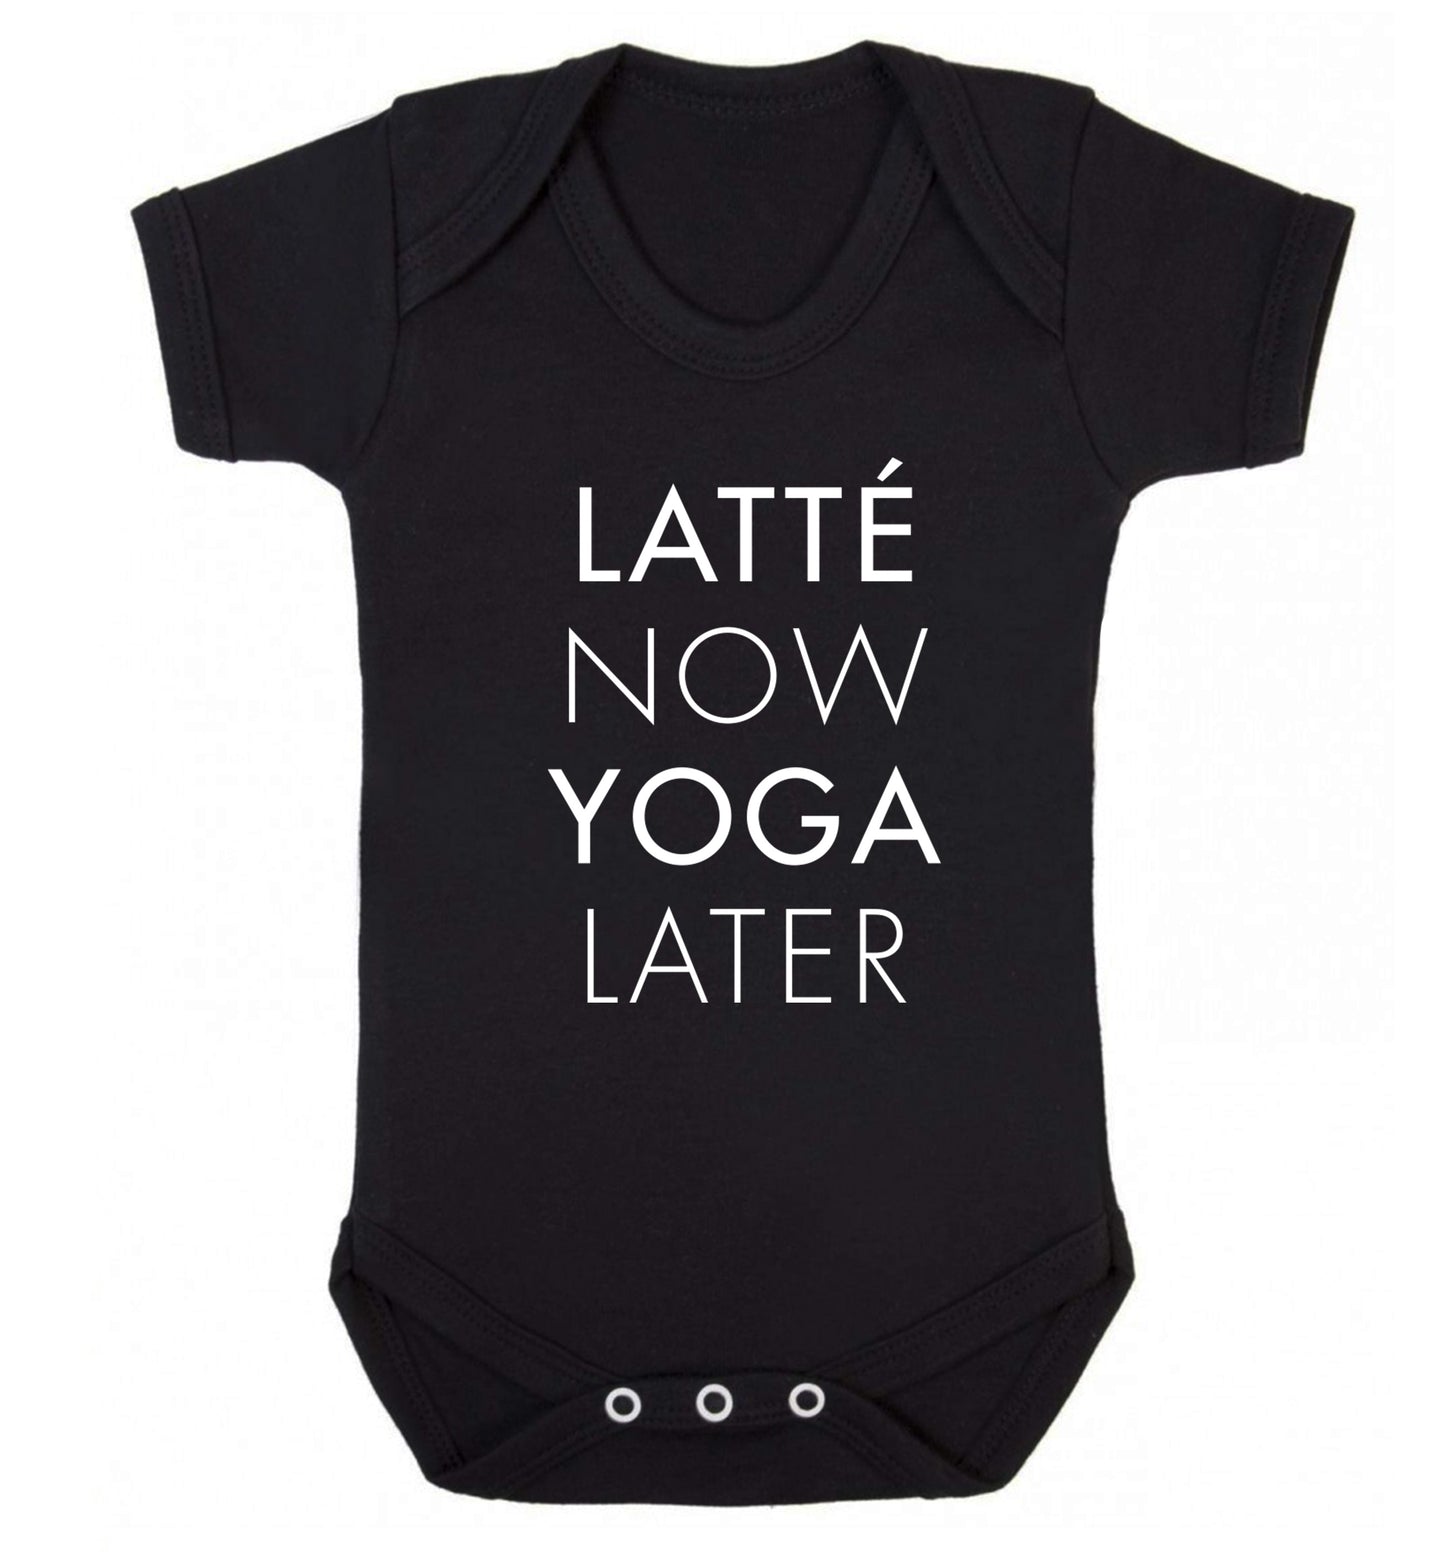 Latte now yoga later Baby Vest black 18-24 months